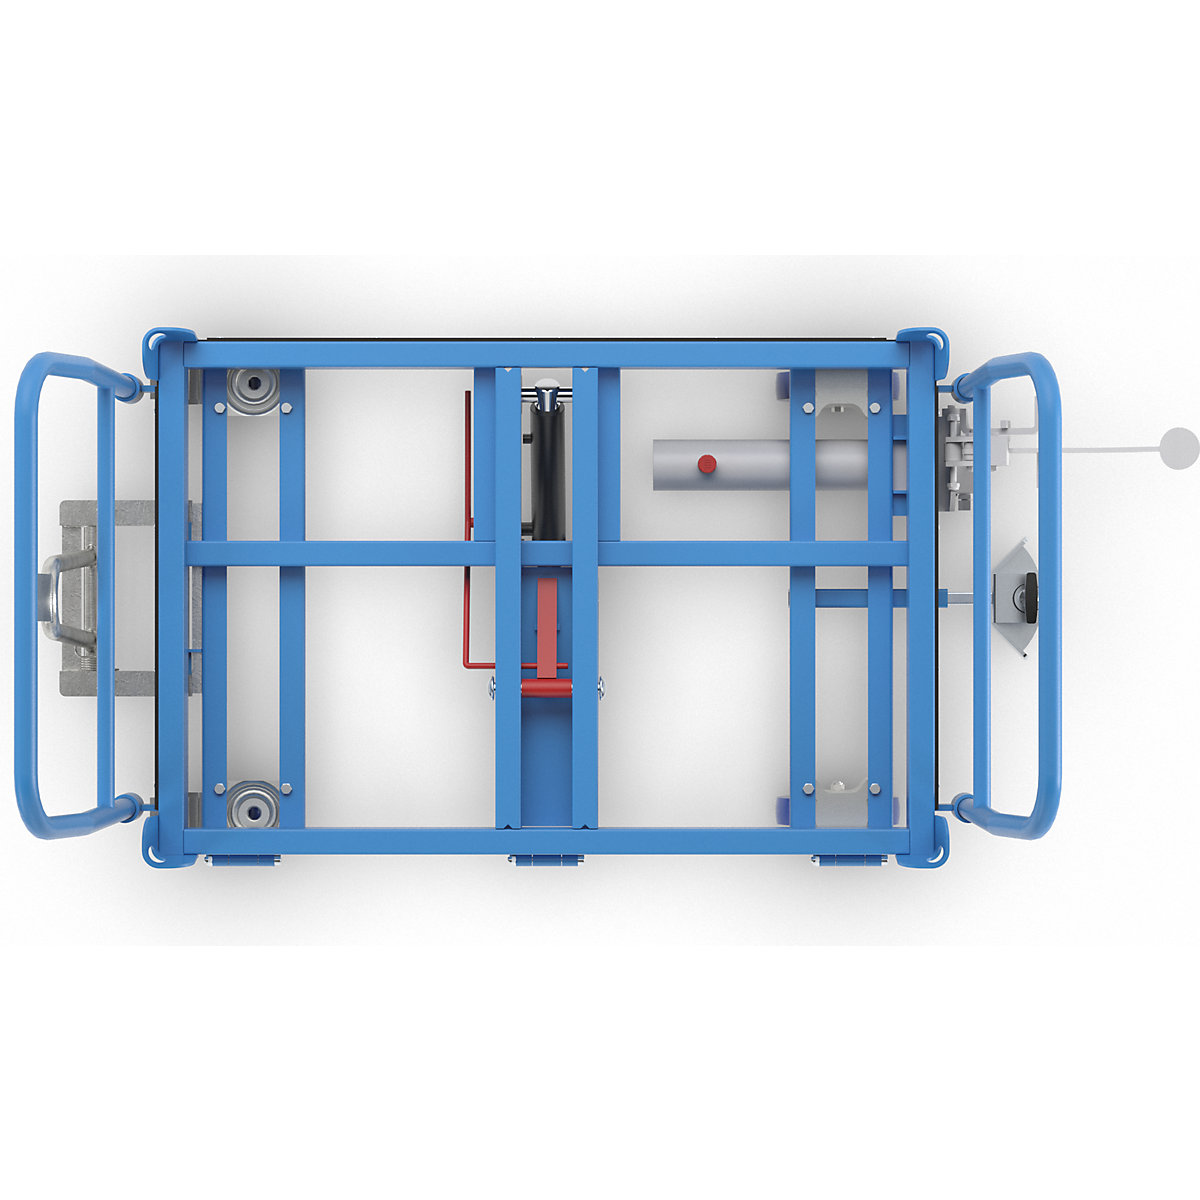 Nagibni transportni okvir, nosilnost 1000 kg – eurokraft pro (Slika izdelka 27)-26